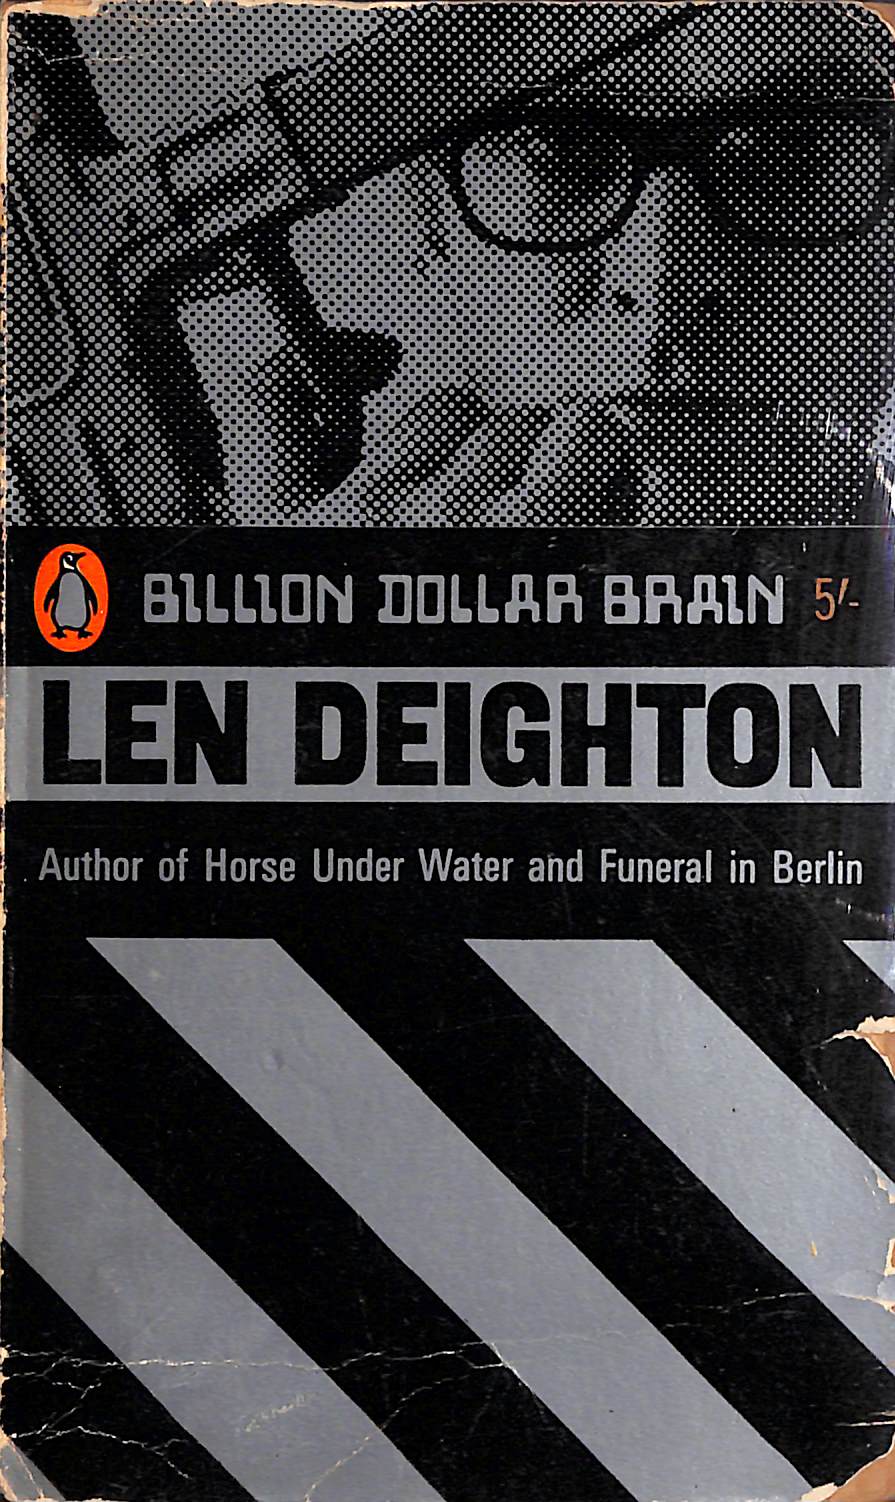 "Billion Dollar Brain" 1967 DEIGHTON, Len